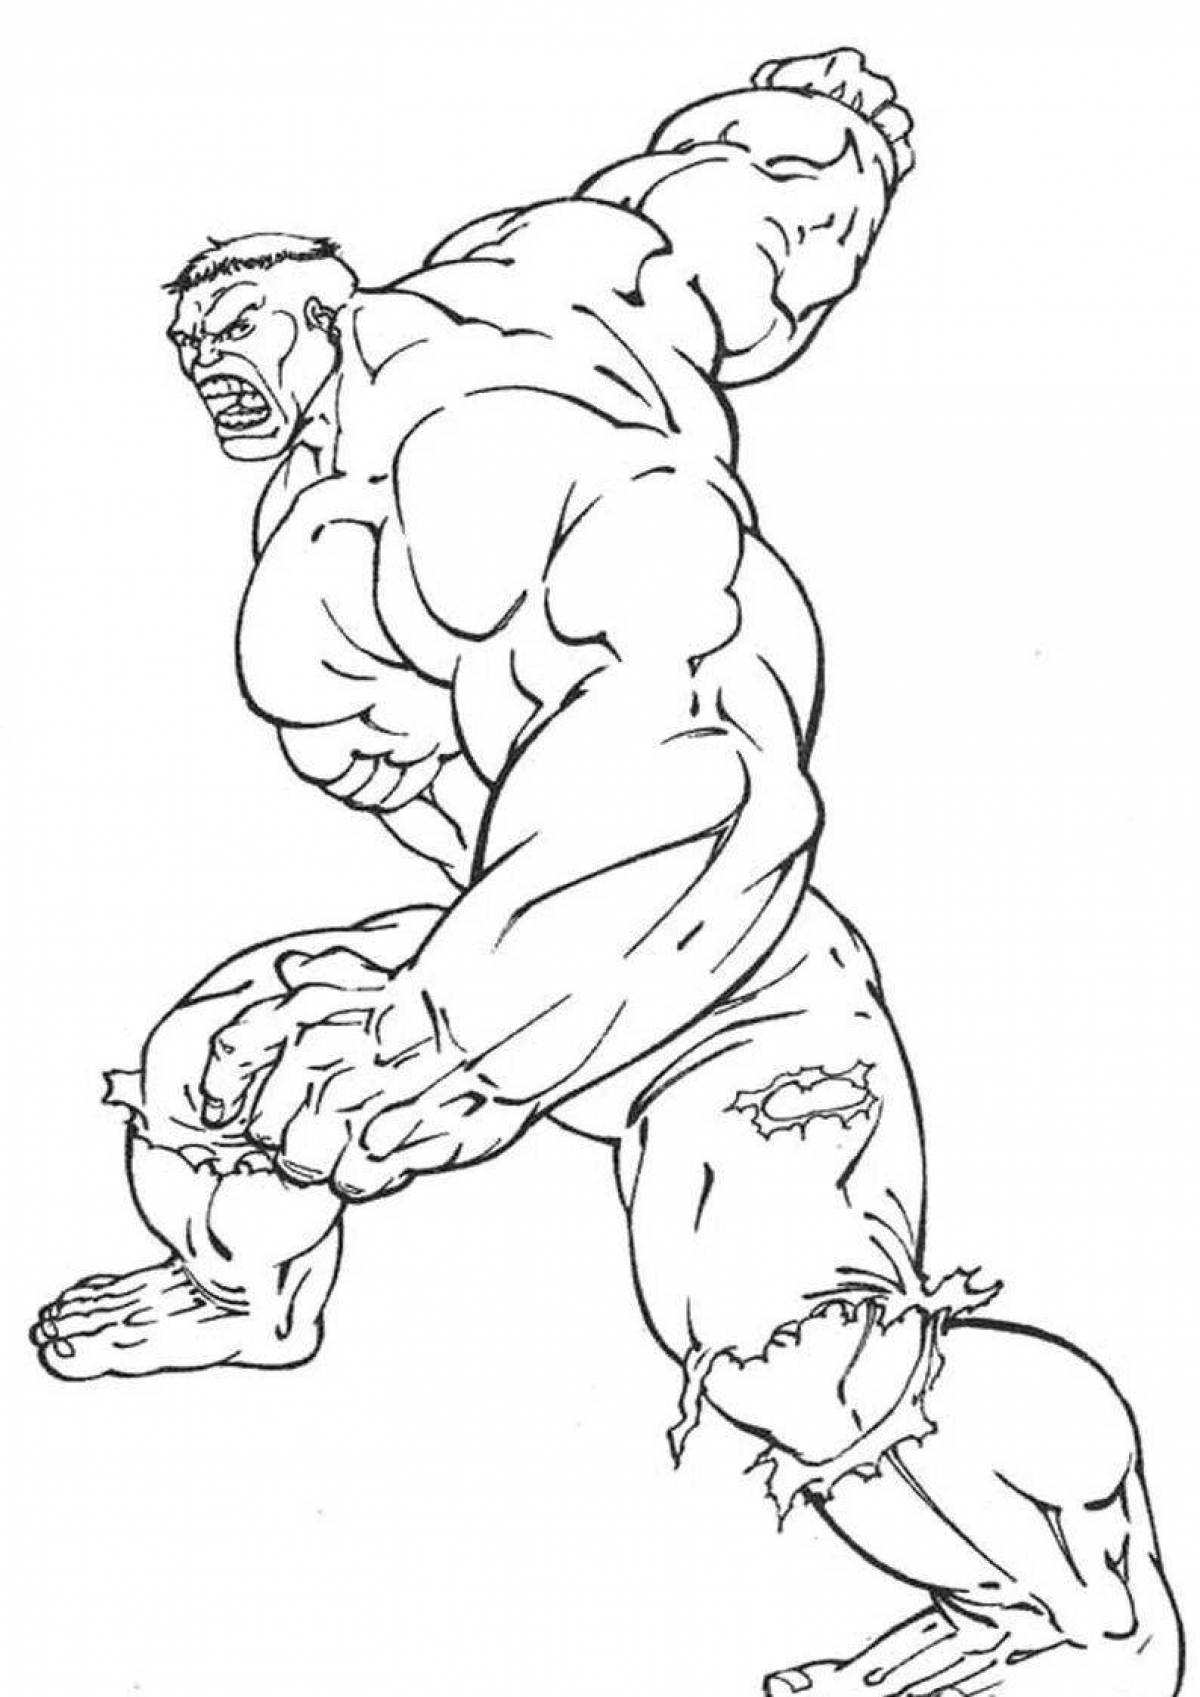 Eminent Iron Hulk coloring page